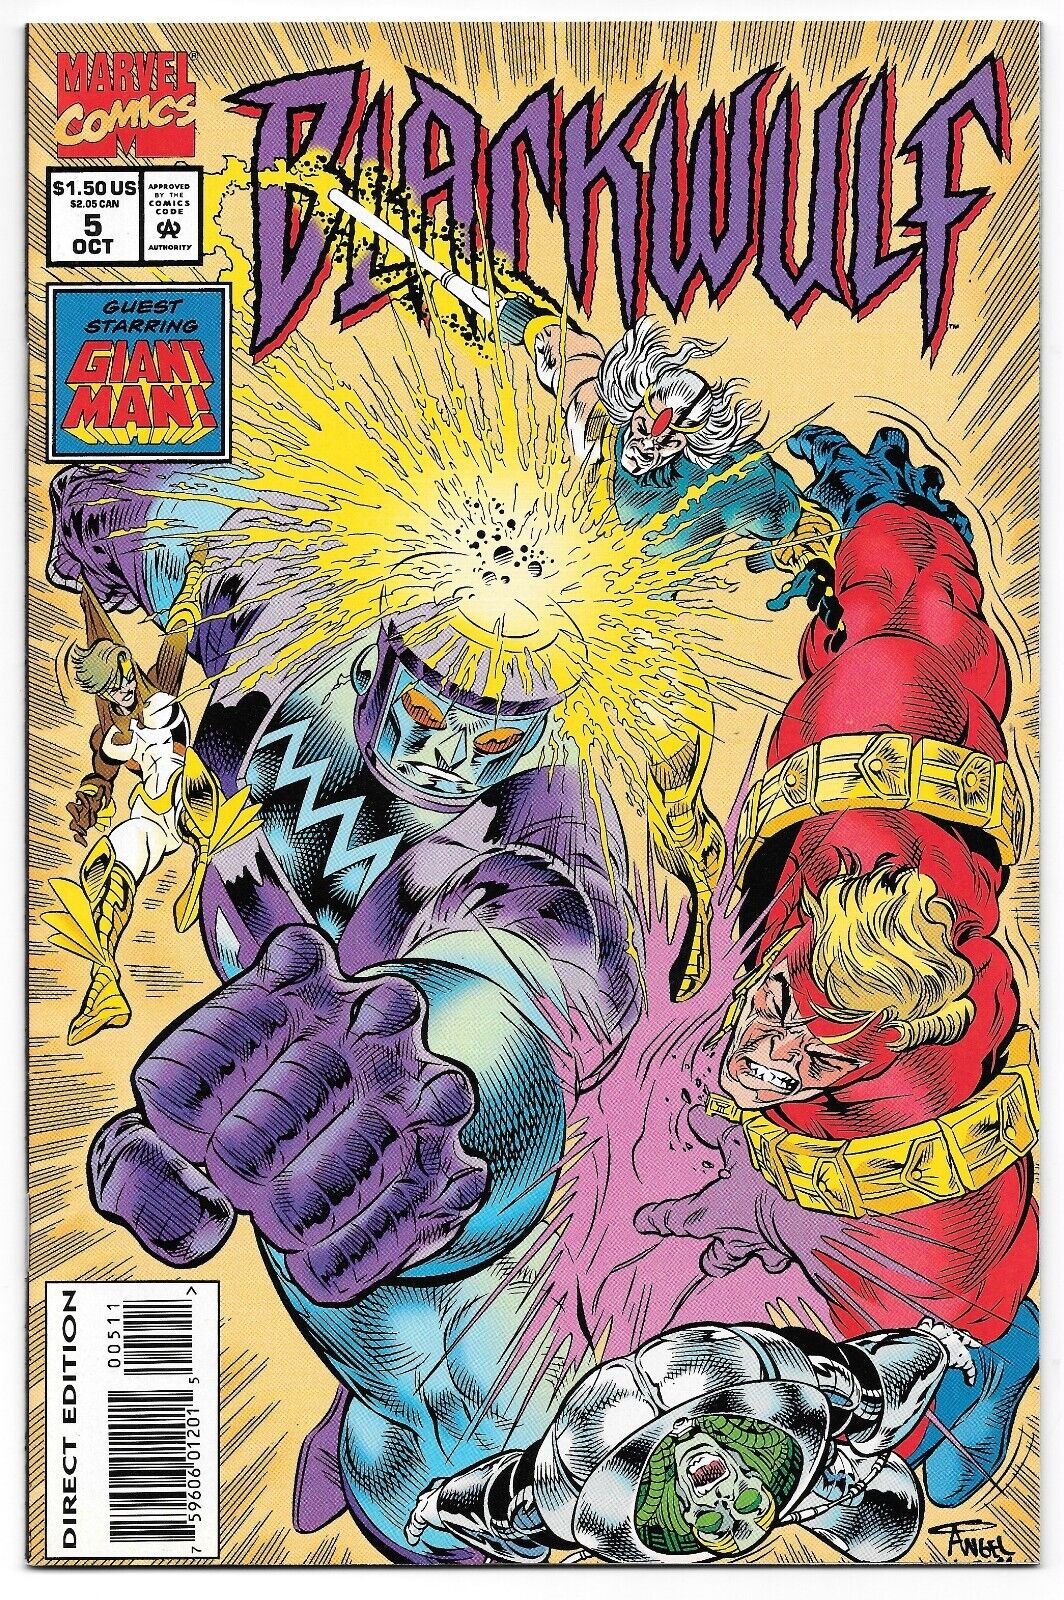 Blackwulf #5 (10/1994) Marvel Comics Featuring Giant Man